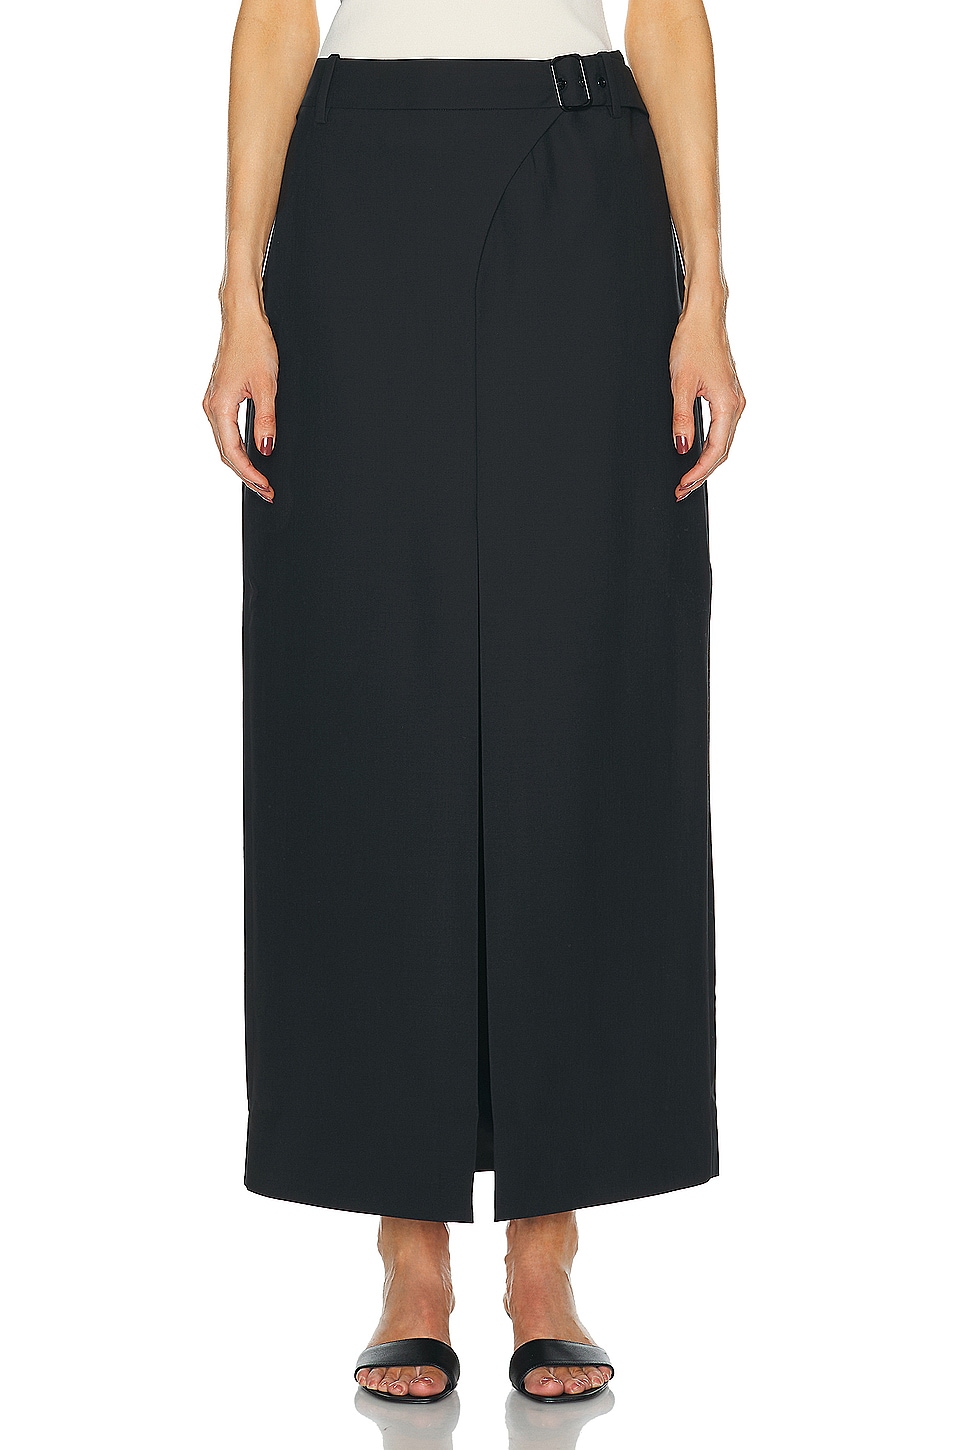 Image 1 of SIR. Leonardo Belted Midi Skirt in Black